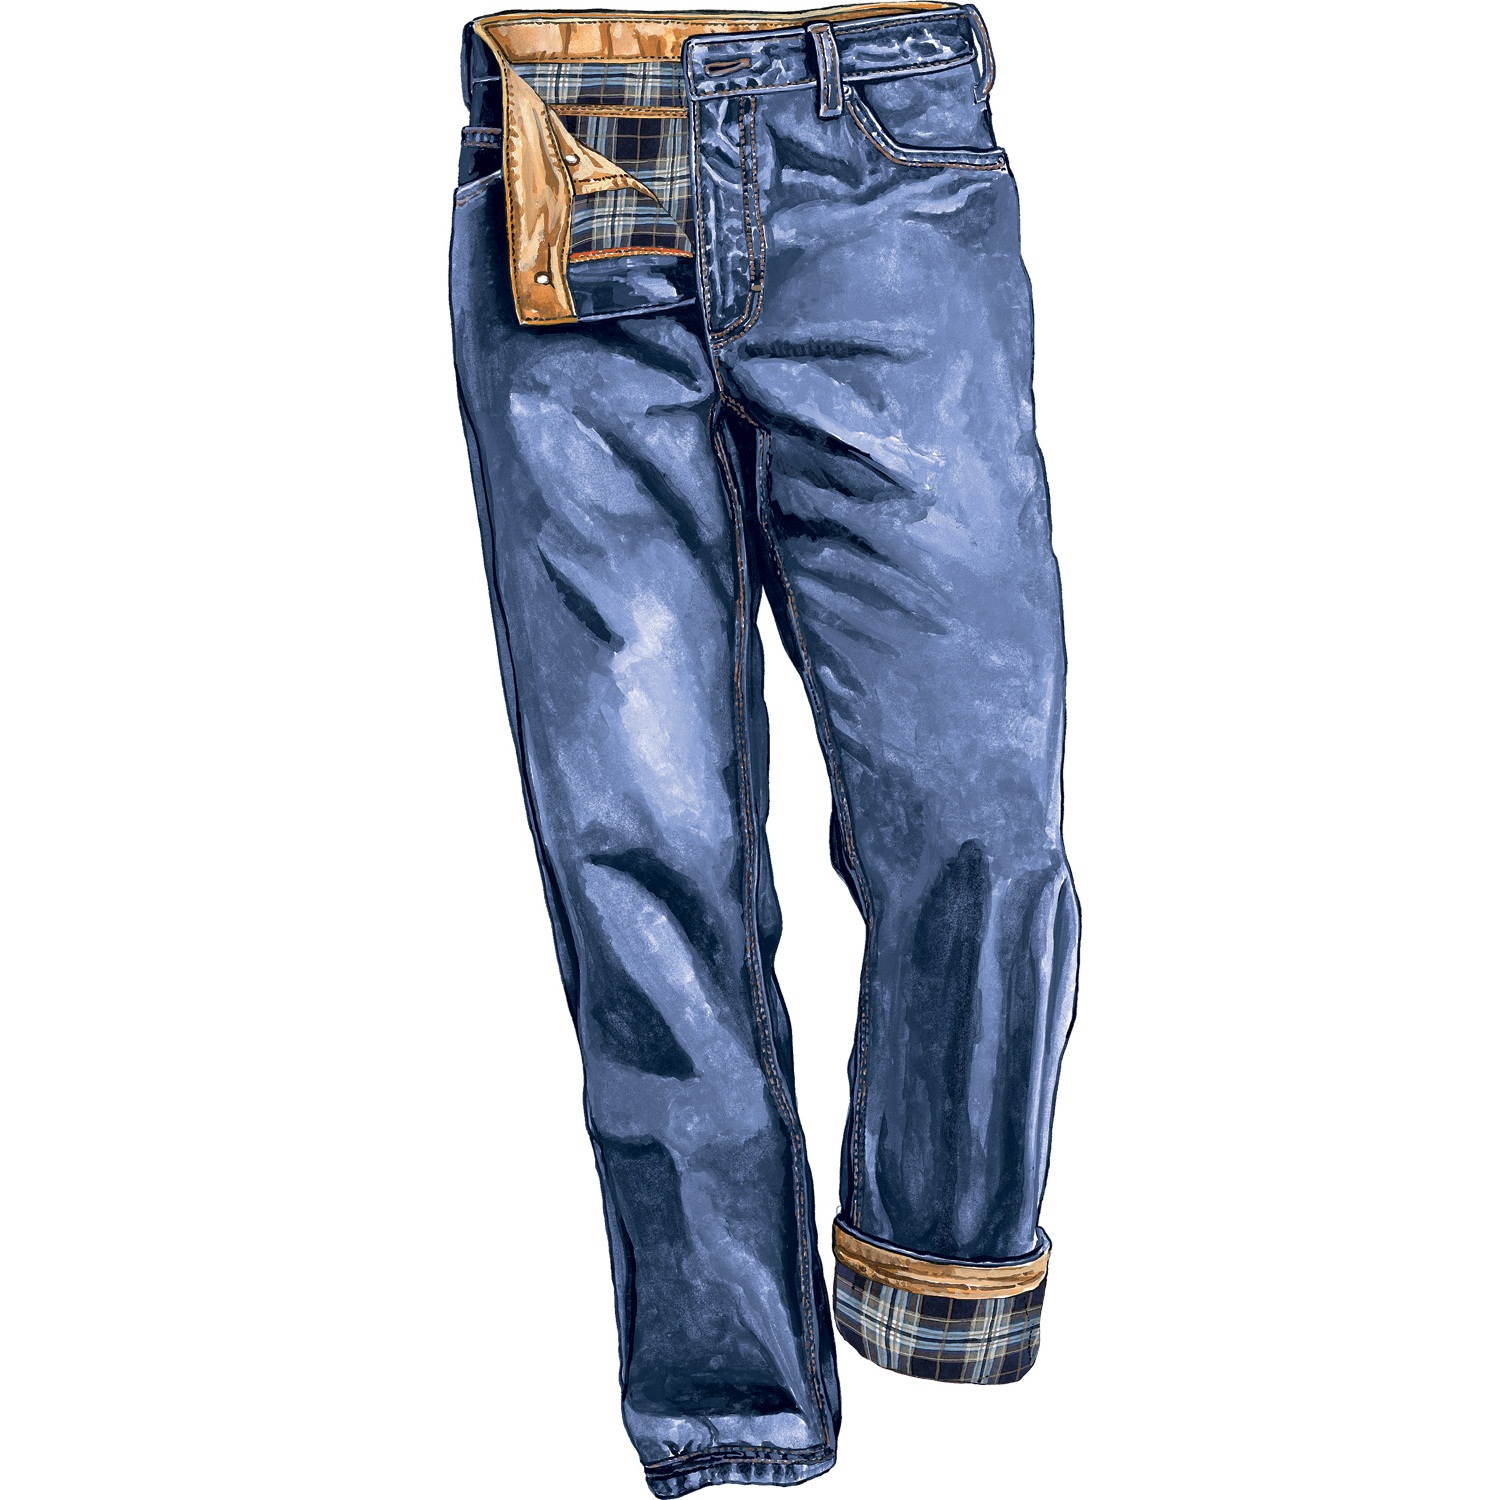 flannel lined jeans menu0027s ballroom flannel-lined 5-pocket jeans. denim wseaeks